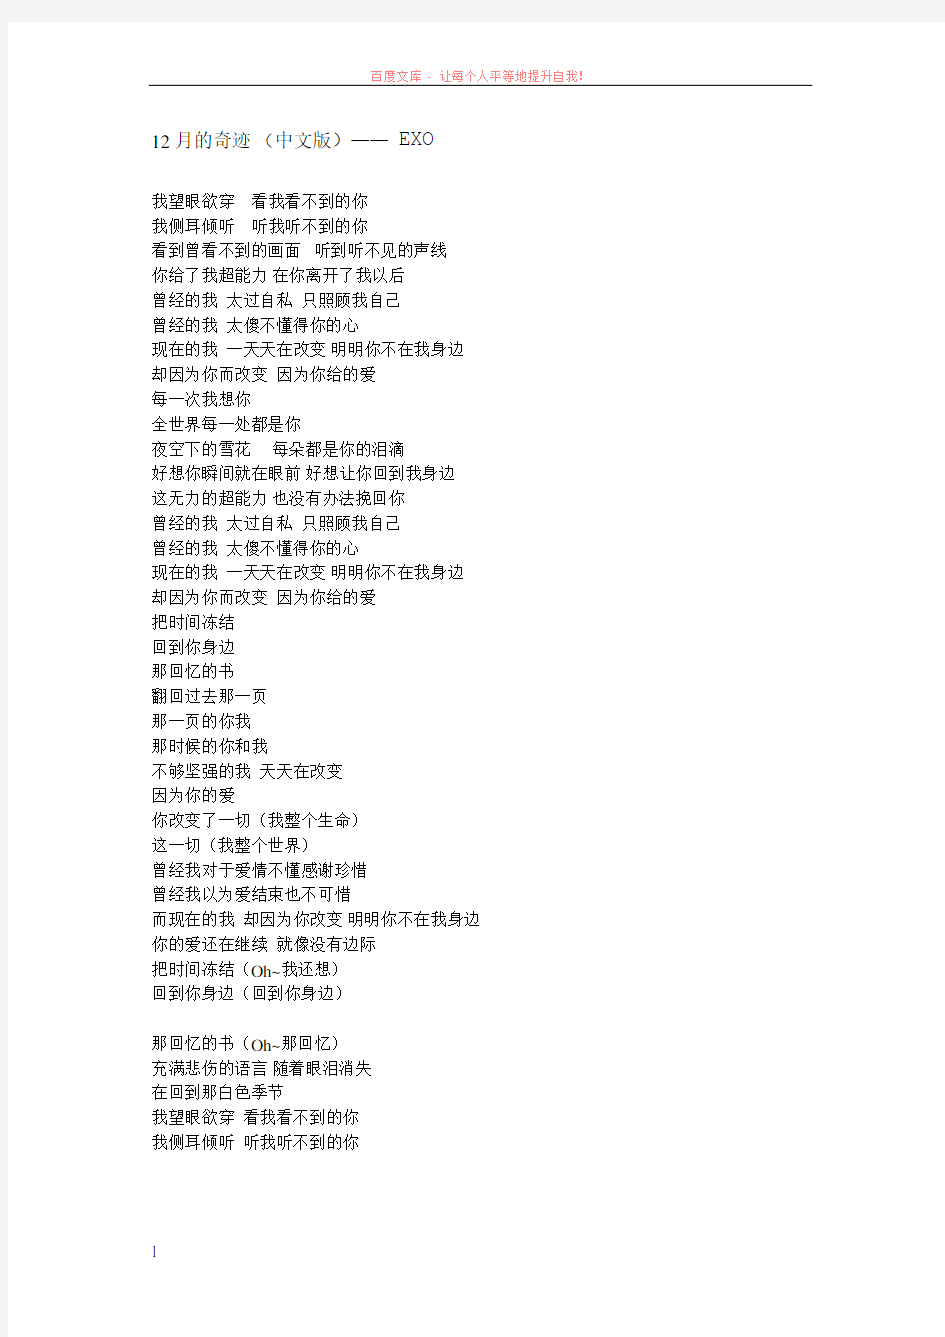 exo12月的奇迹中文韩文歌词 (1)